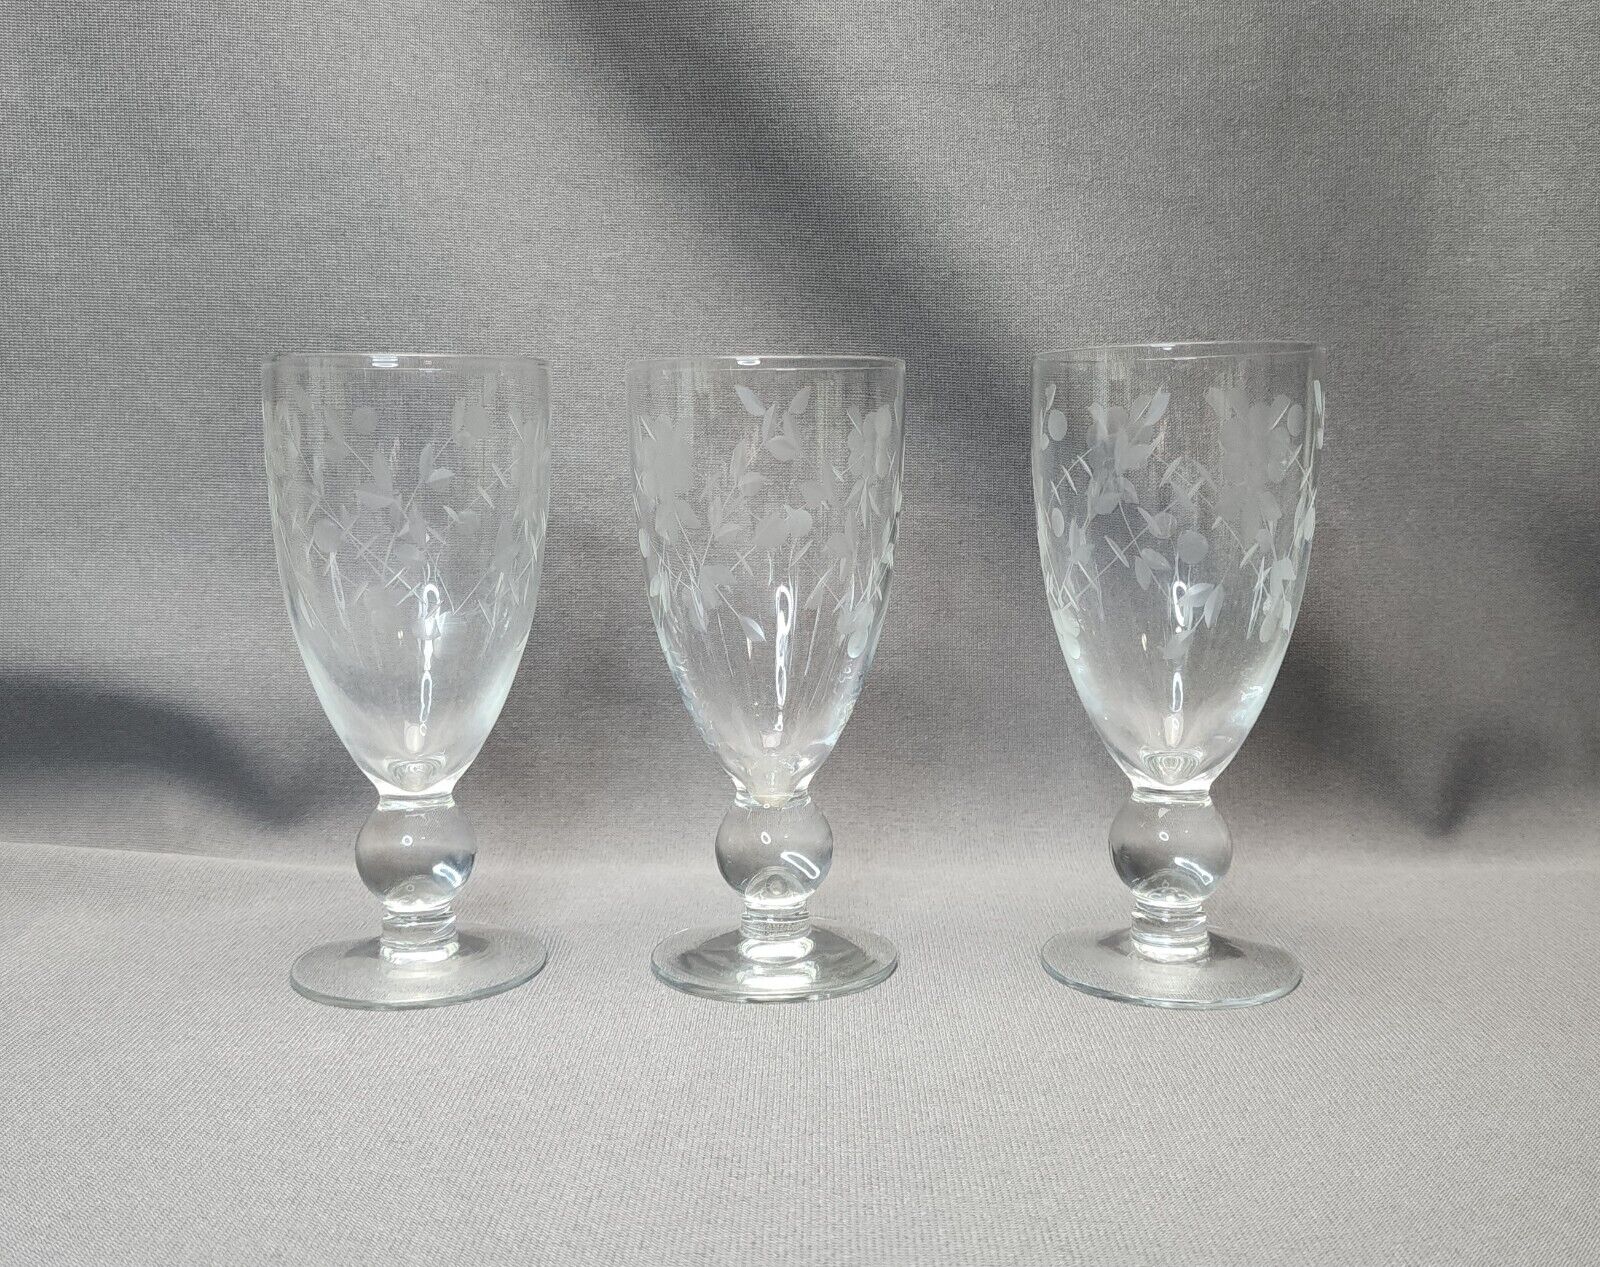 Vintage Etched Floral Juice Glasses 6 oz Tumblers (Set of 3) Mid-Century Modern